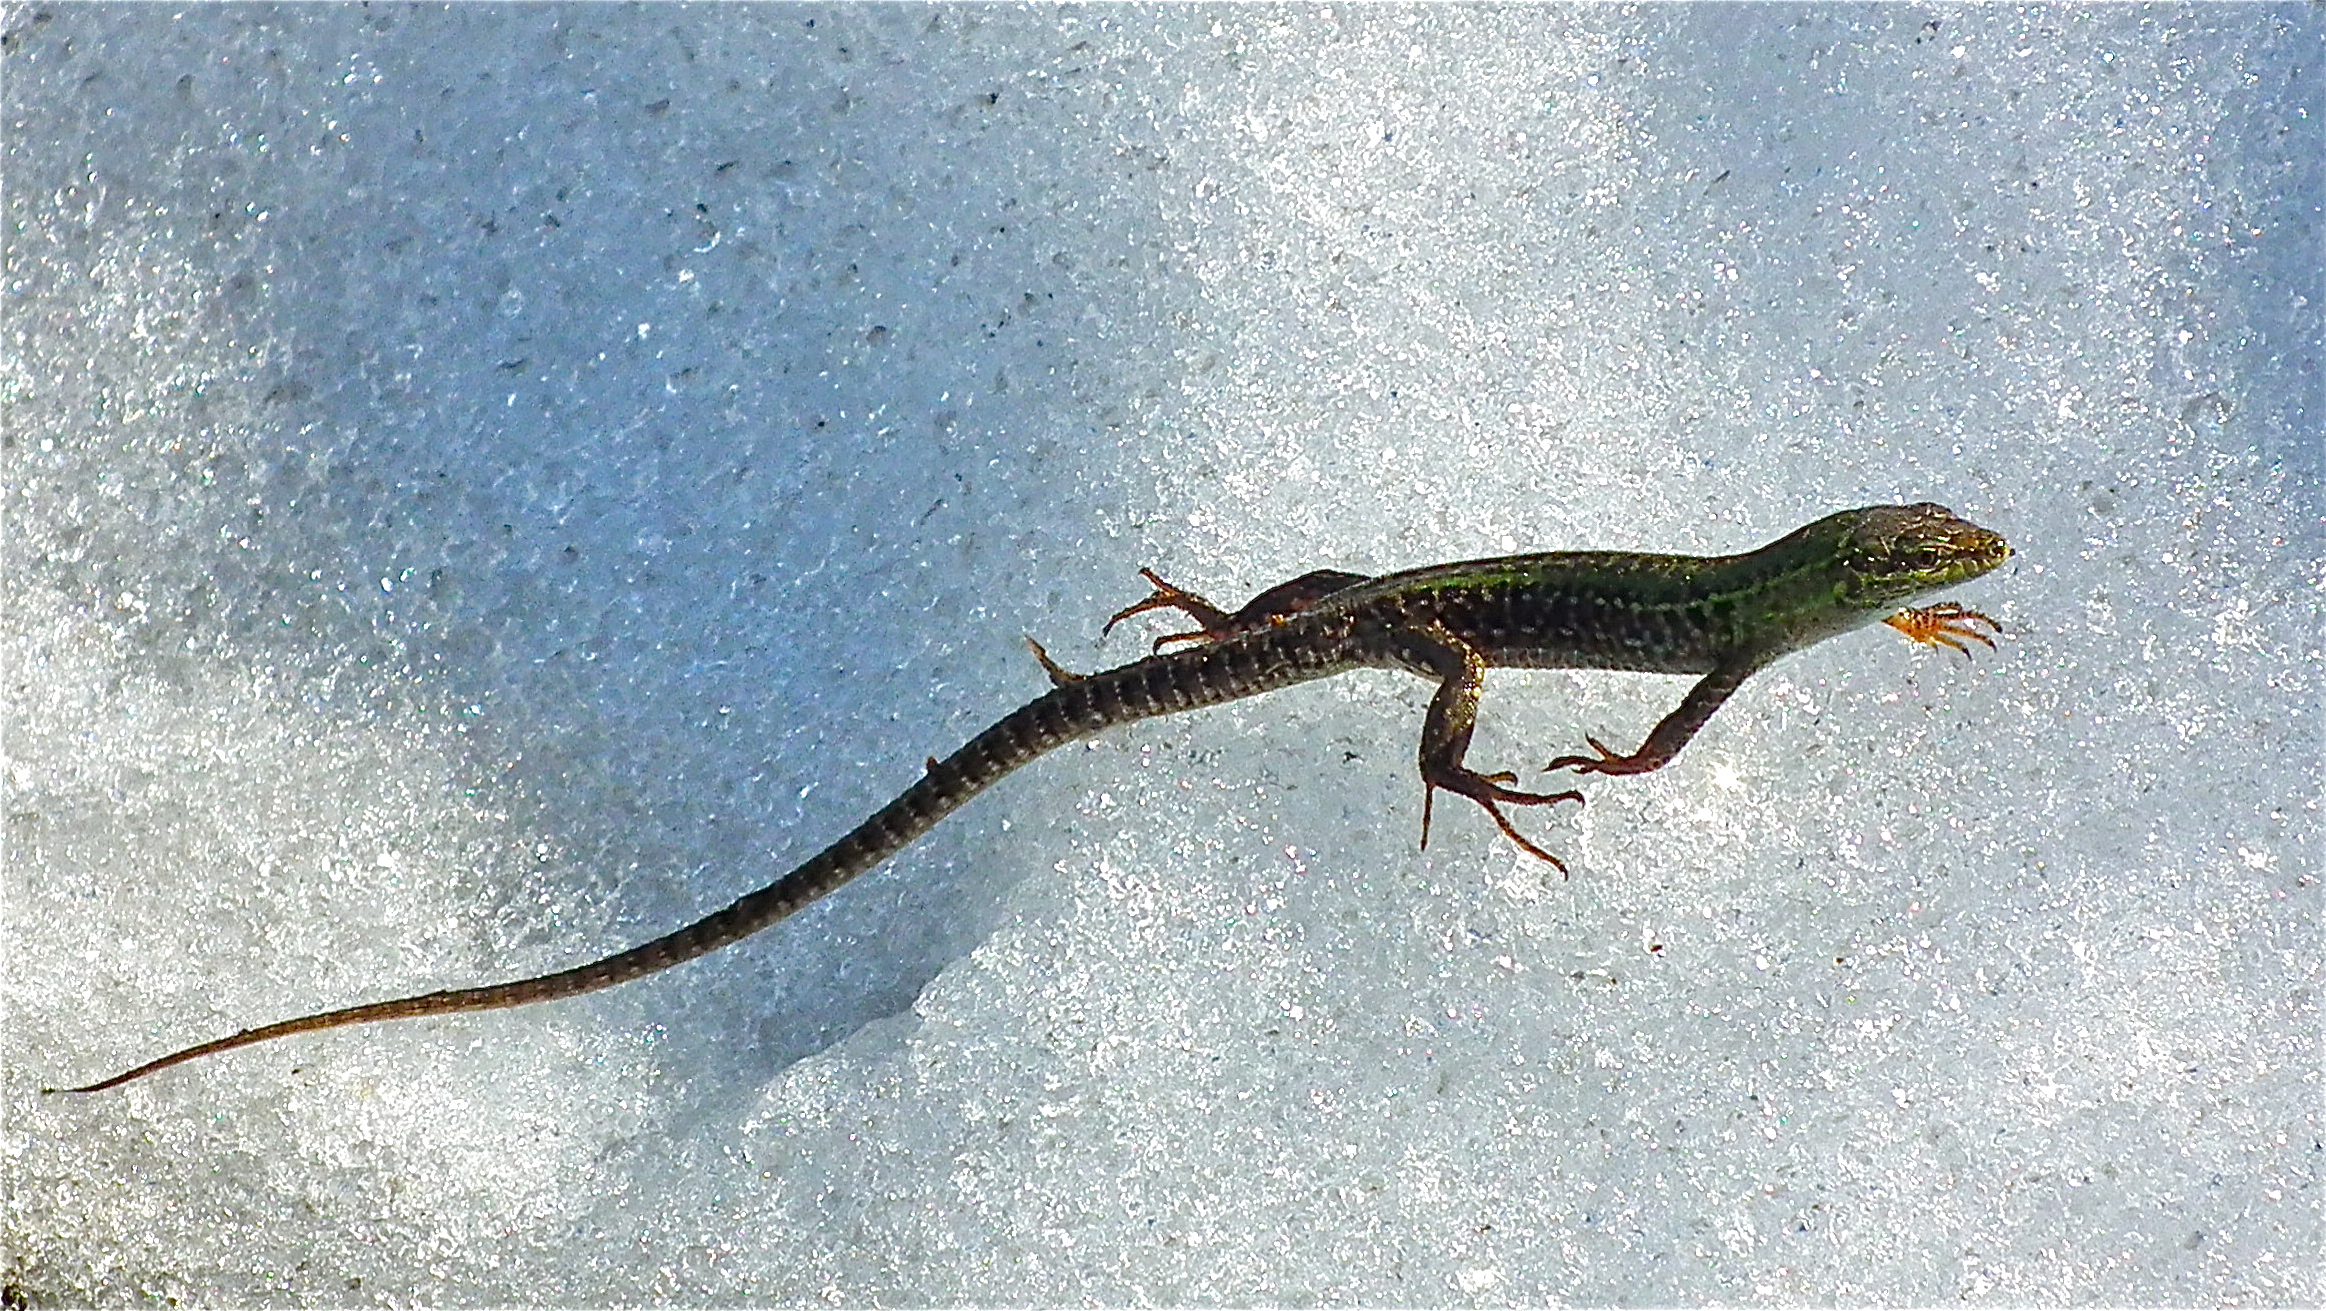 Lizard on ice...